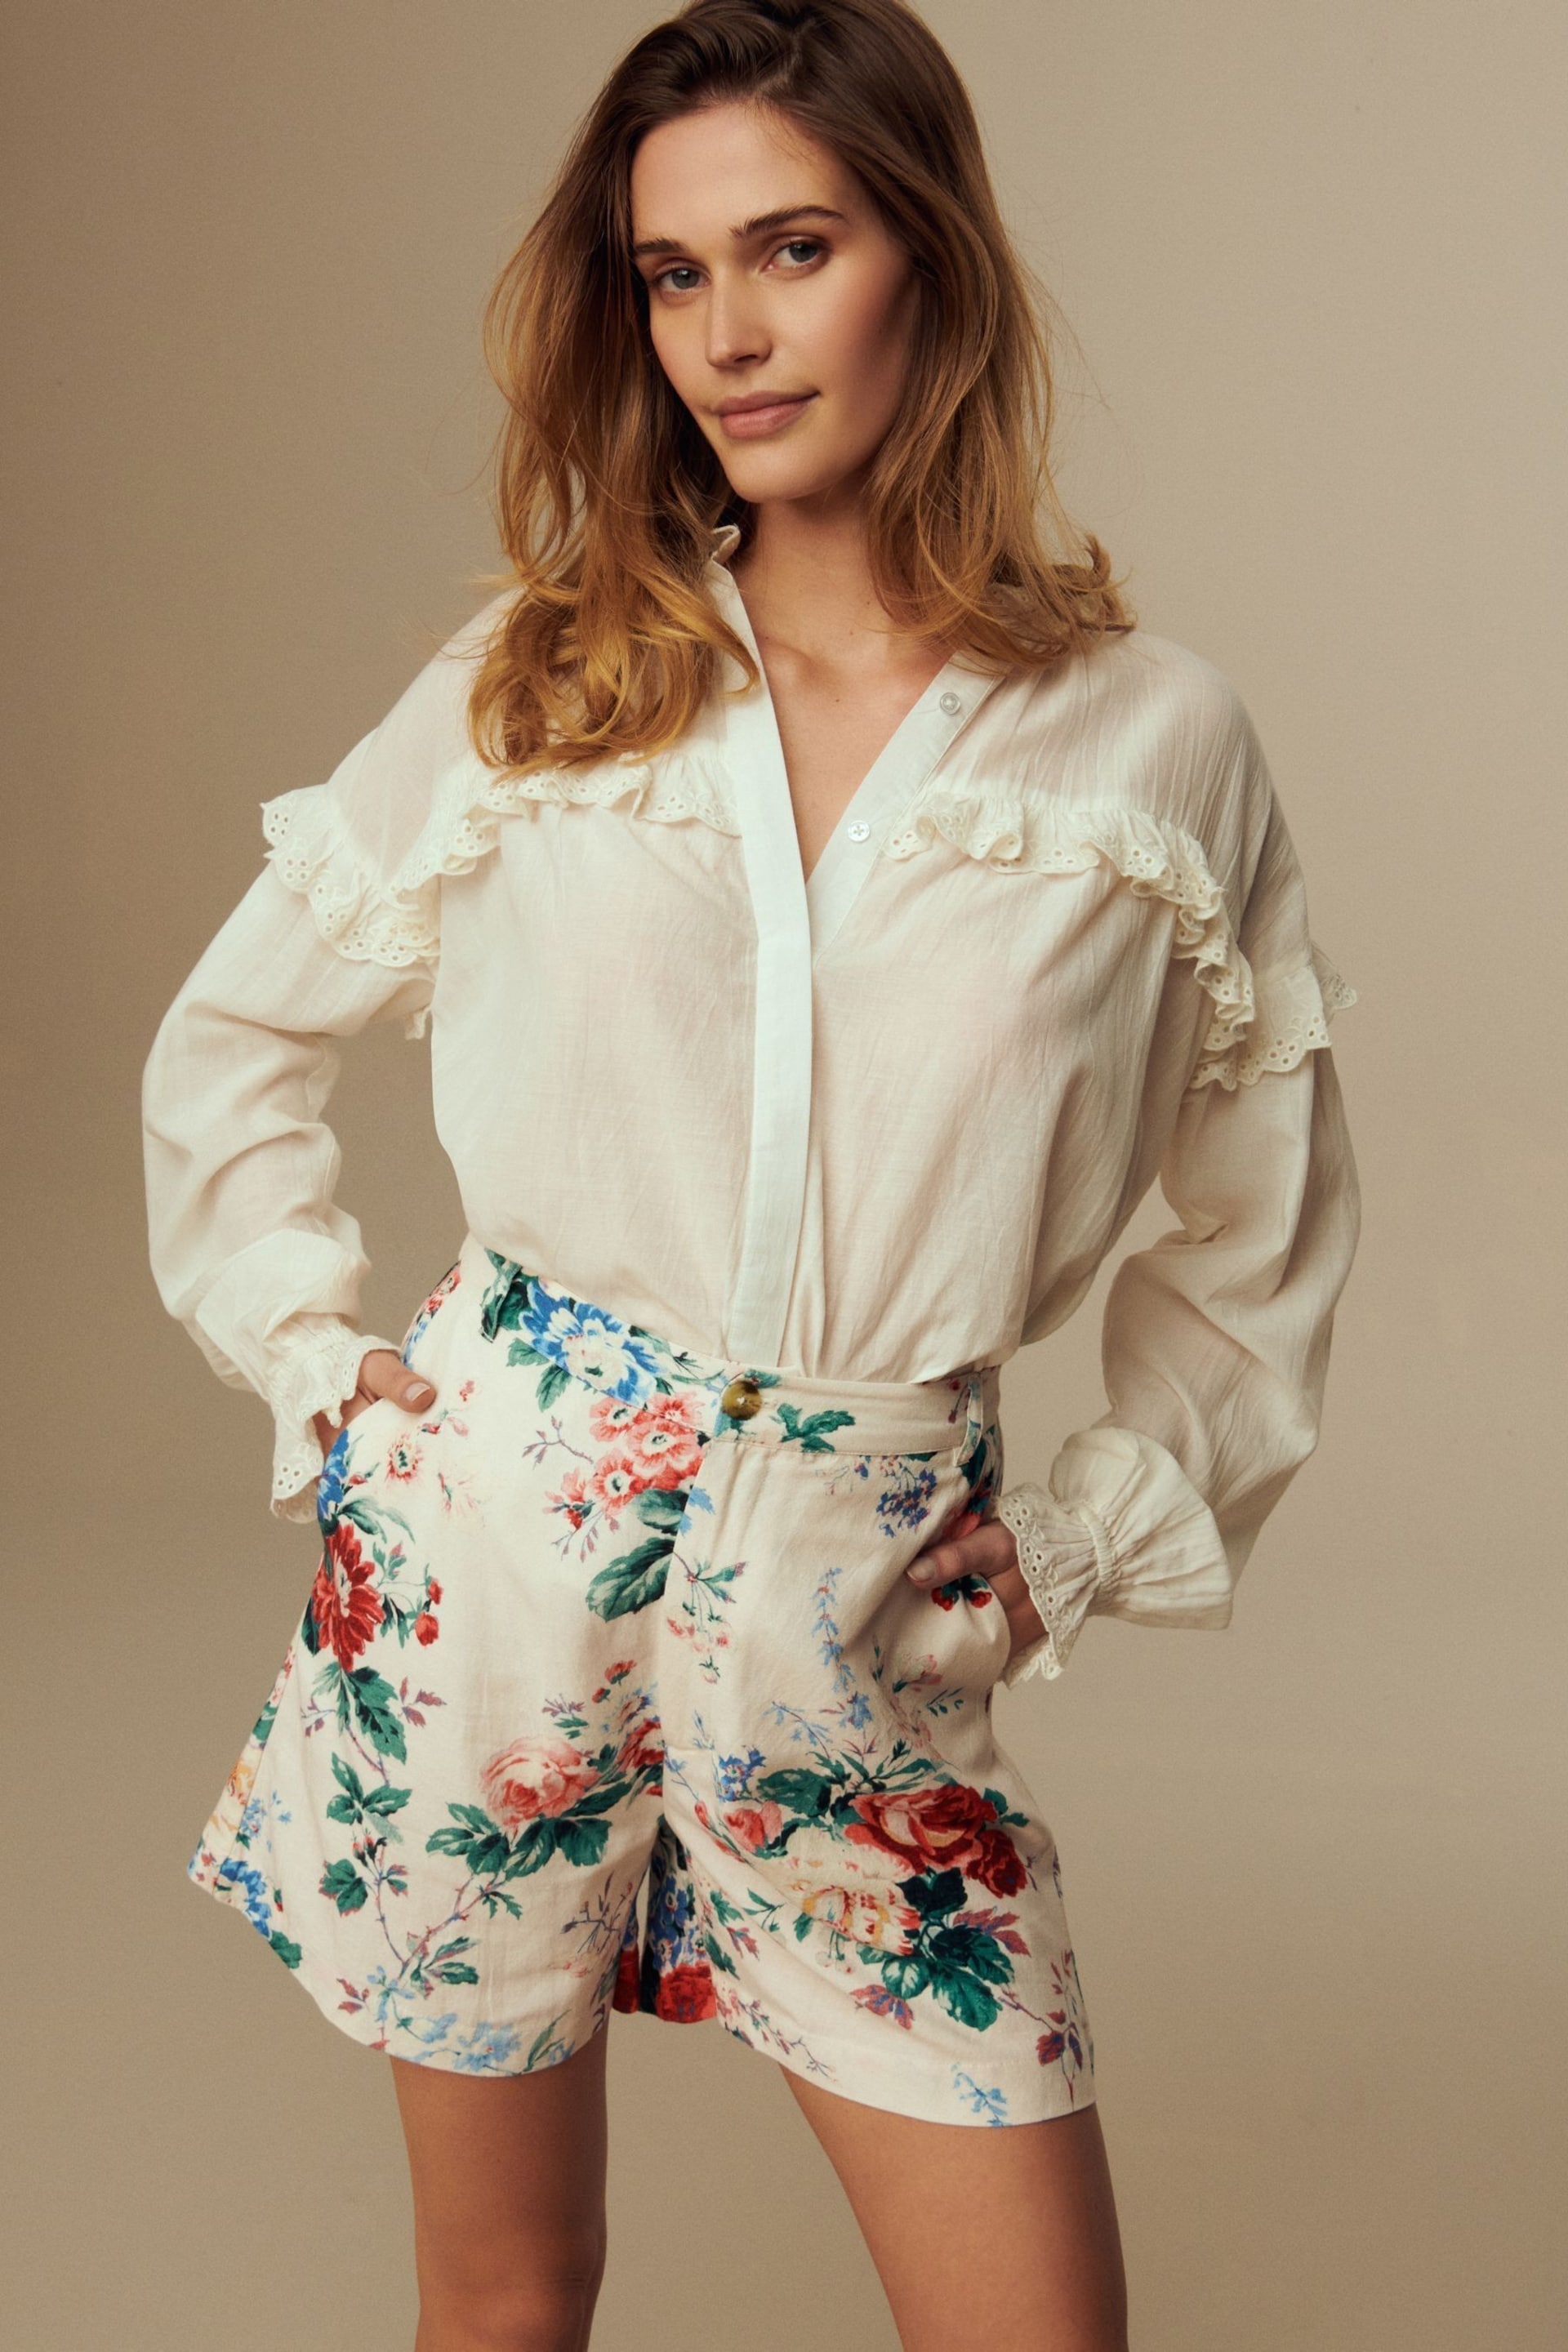 Laura Ashley Cream Linen Blend Floral Shorts - Image 1 of 5